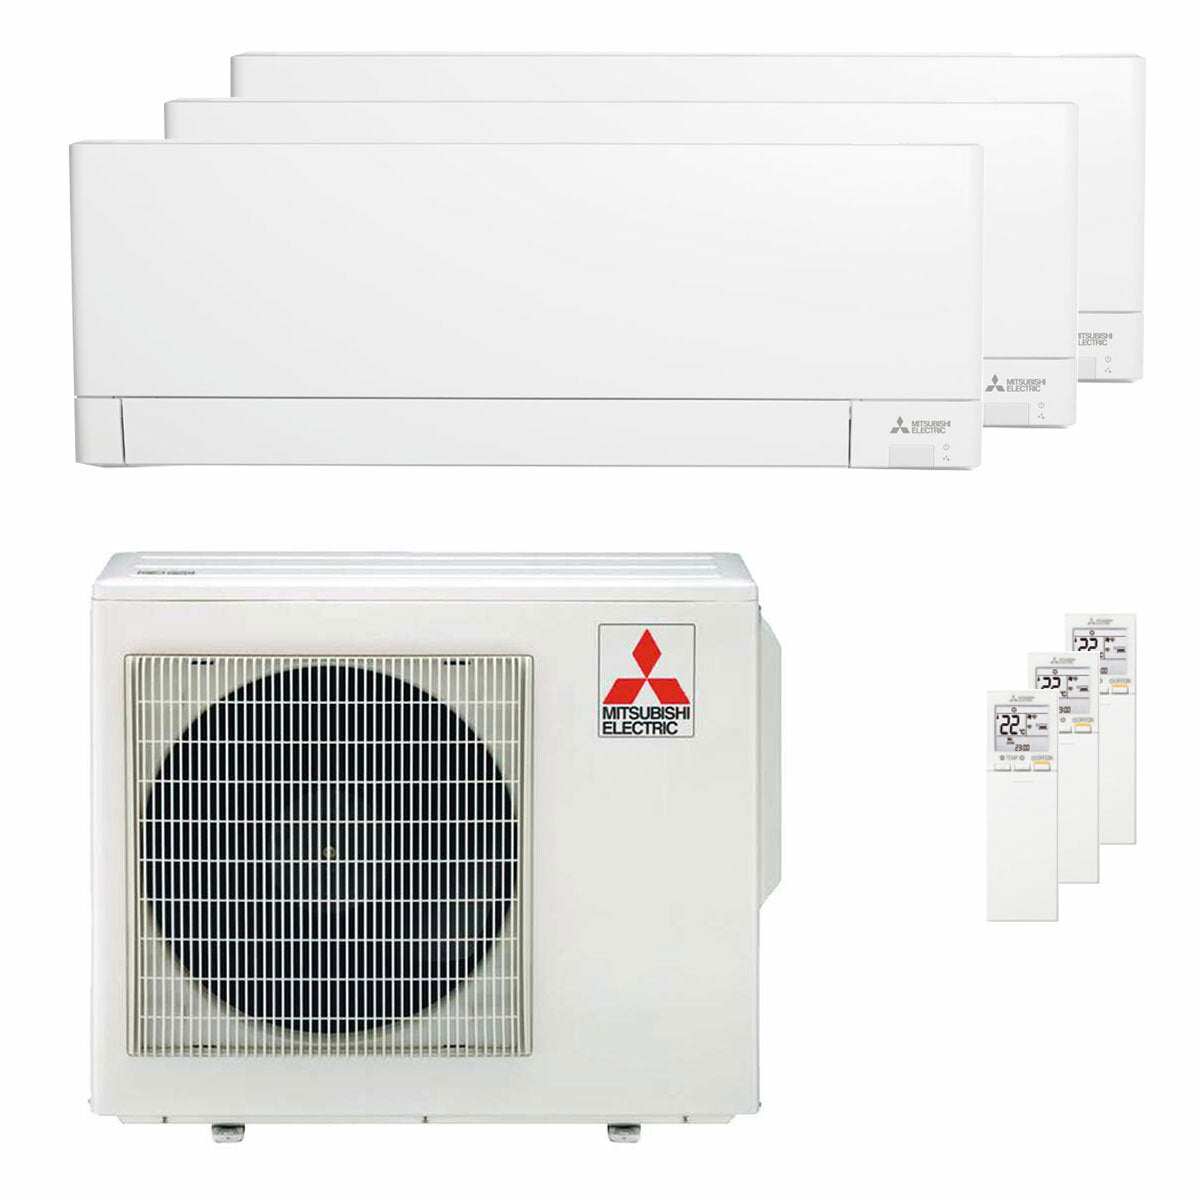 Mitsubishi Electric Air Conditioner AY Series trial split 9000+12000+12000 BTU inverter A++ wifi outdoor unit 5.4 kW